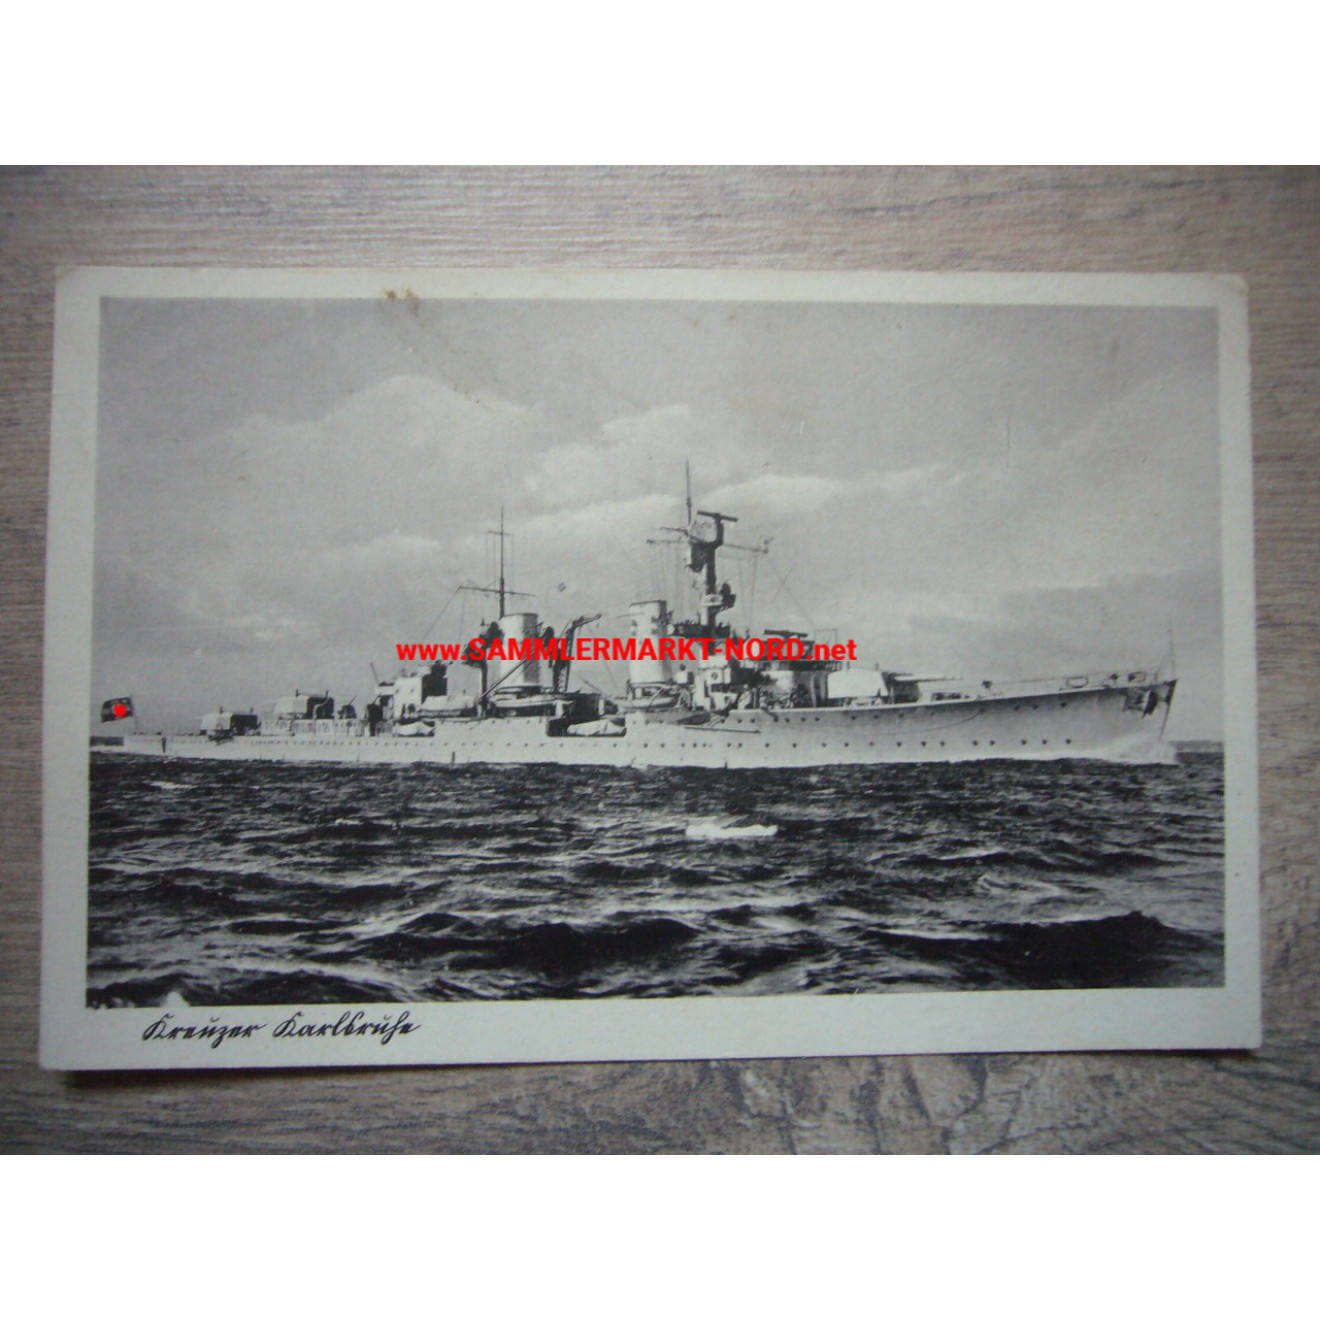 Kriegsmarine - cruiser Karlsruhe - postcard